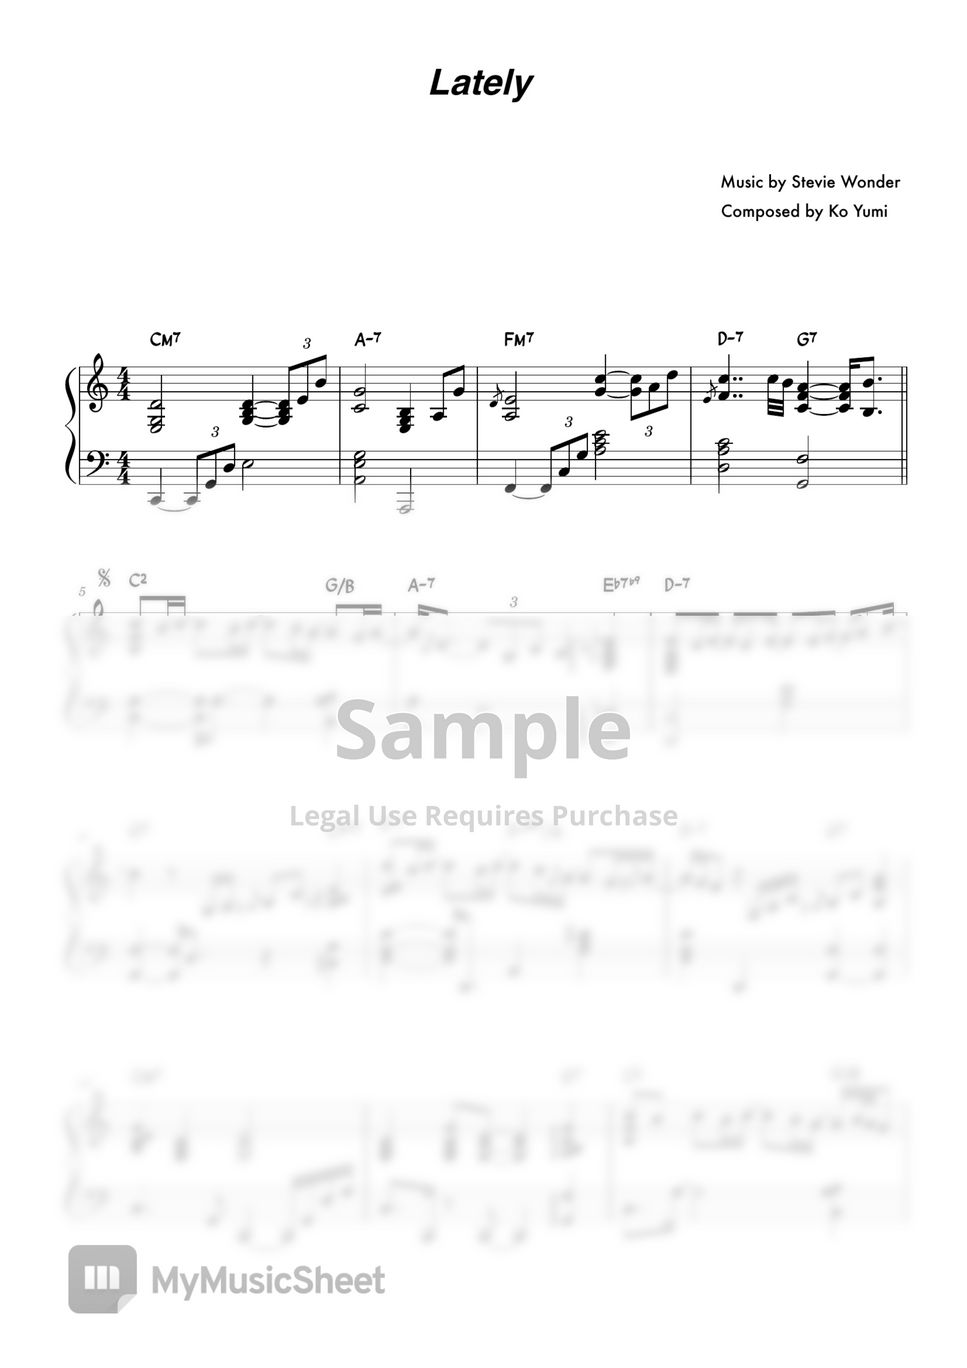 Stevie Wonder - Lately (piano solo) by KoYumi Music